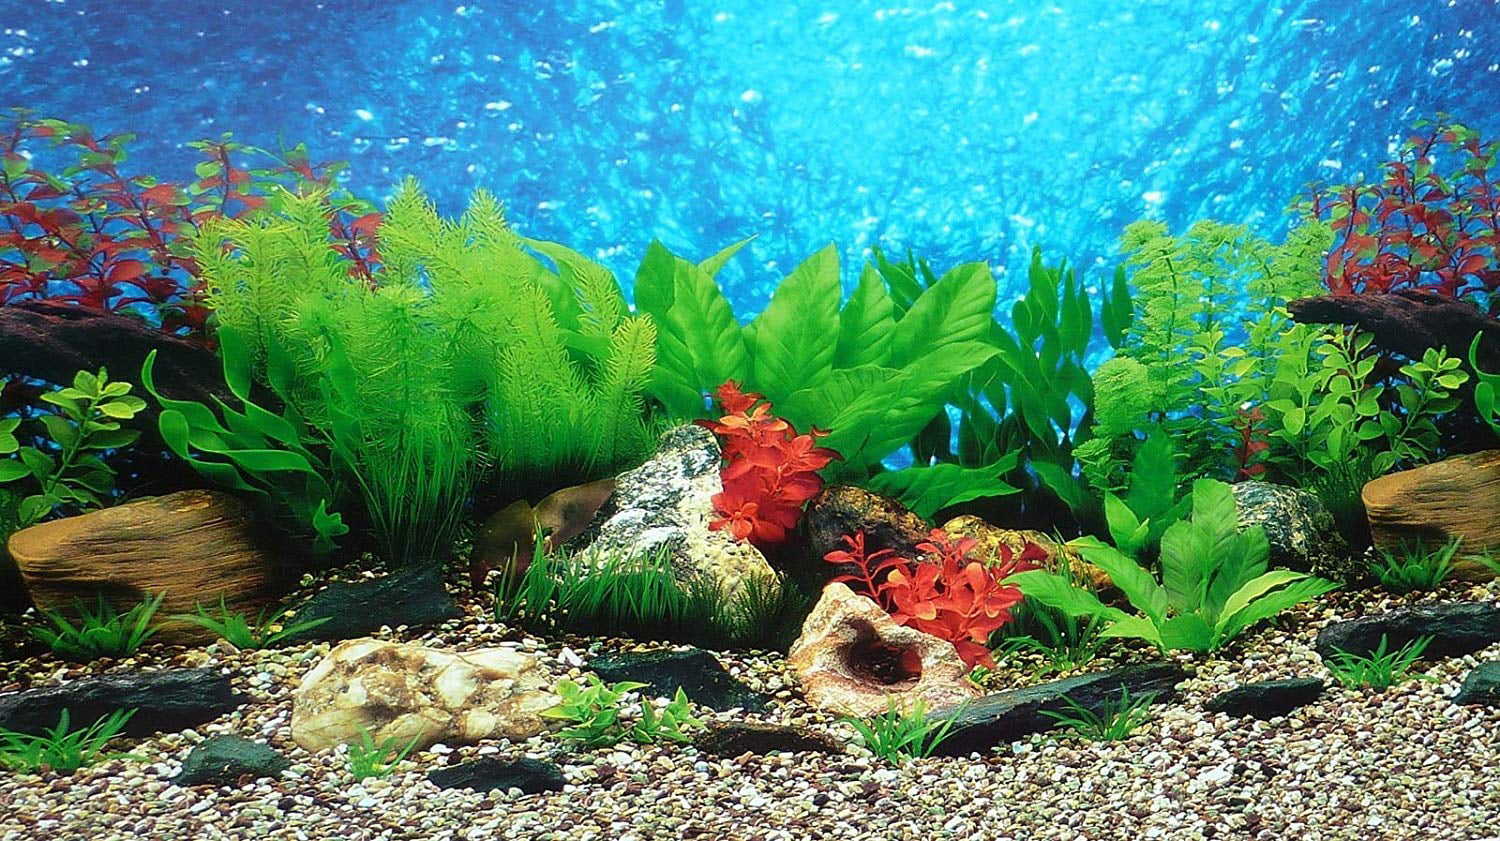 ELEBOX New 20 x 48 Fish Tank Background 2 Sided River Bed & Lake Background Aquarium